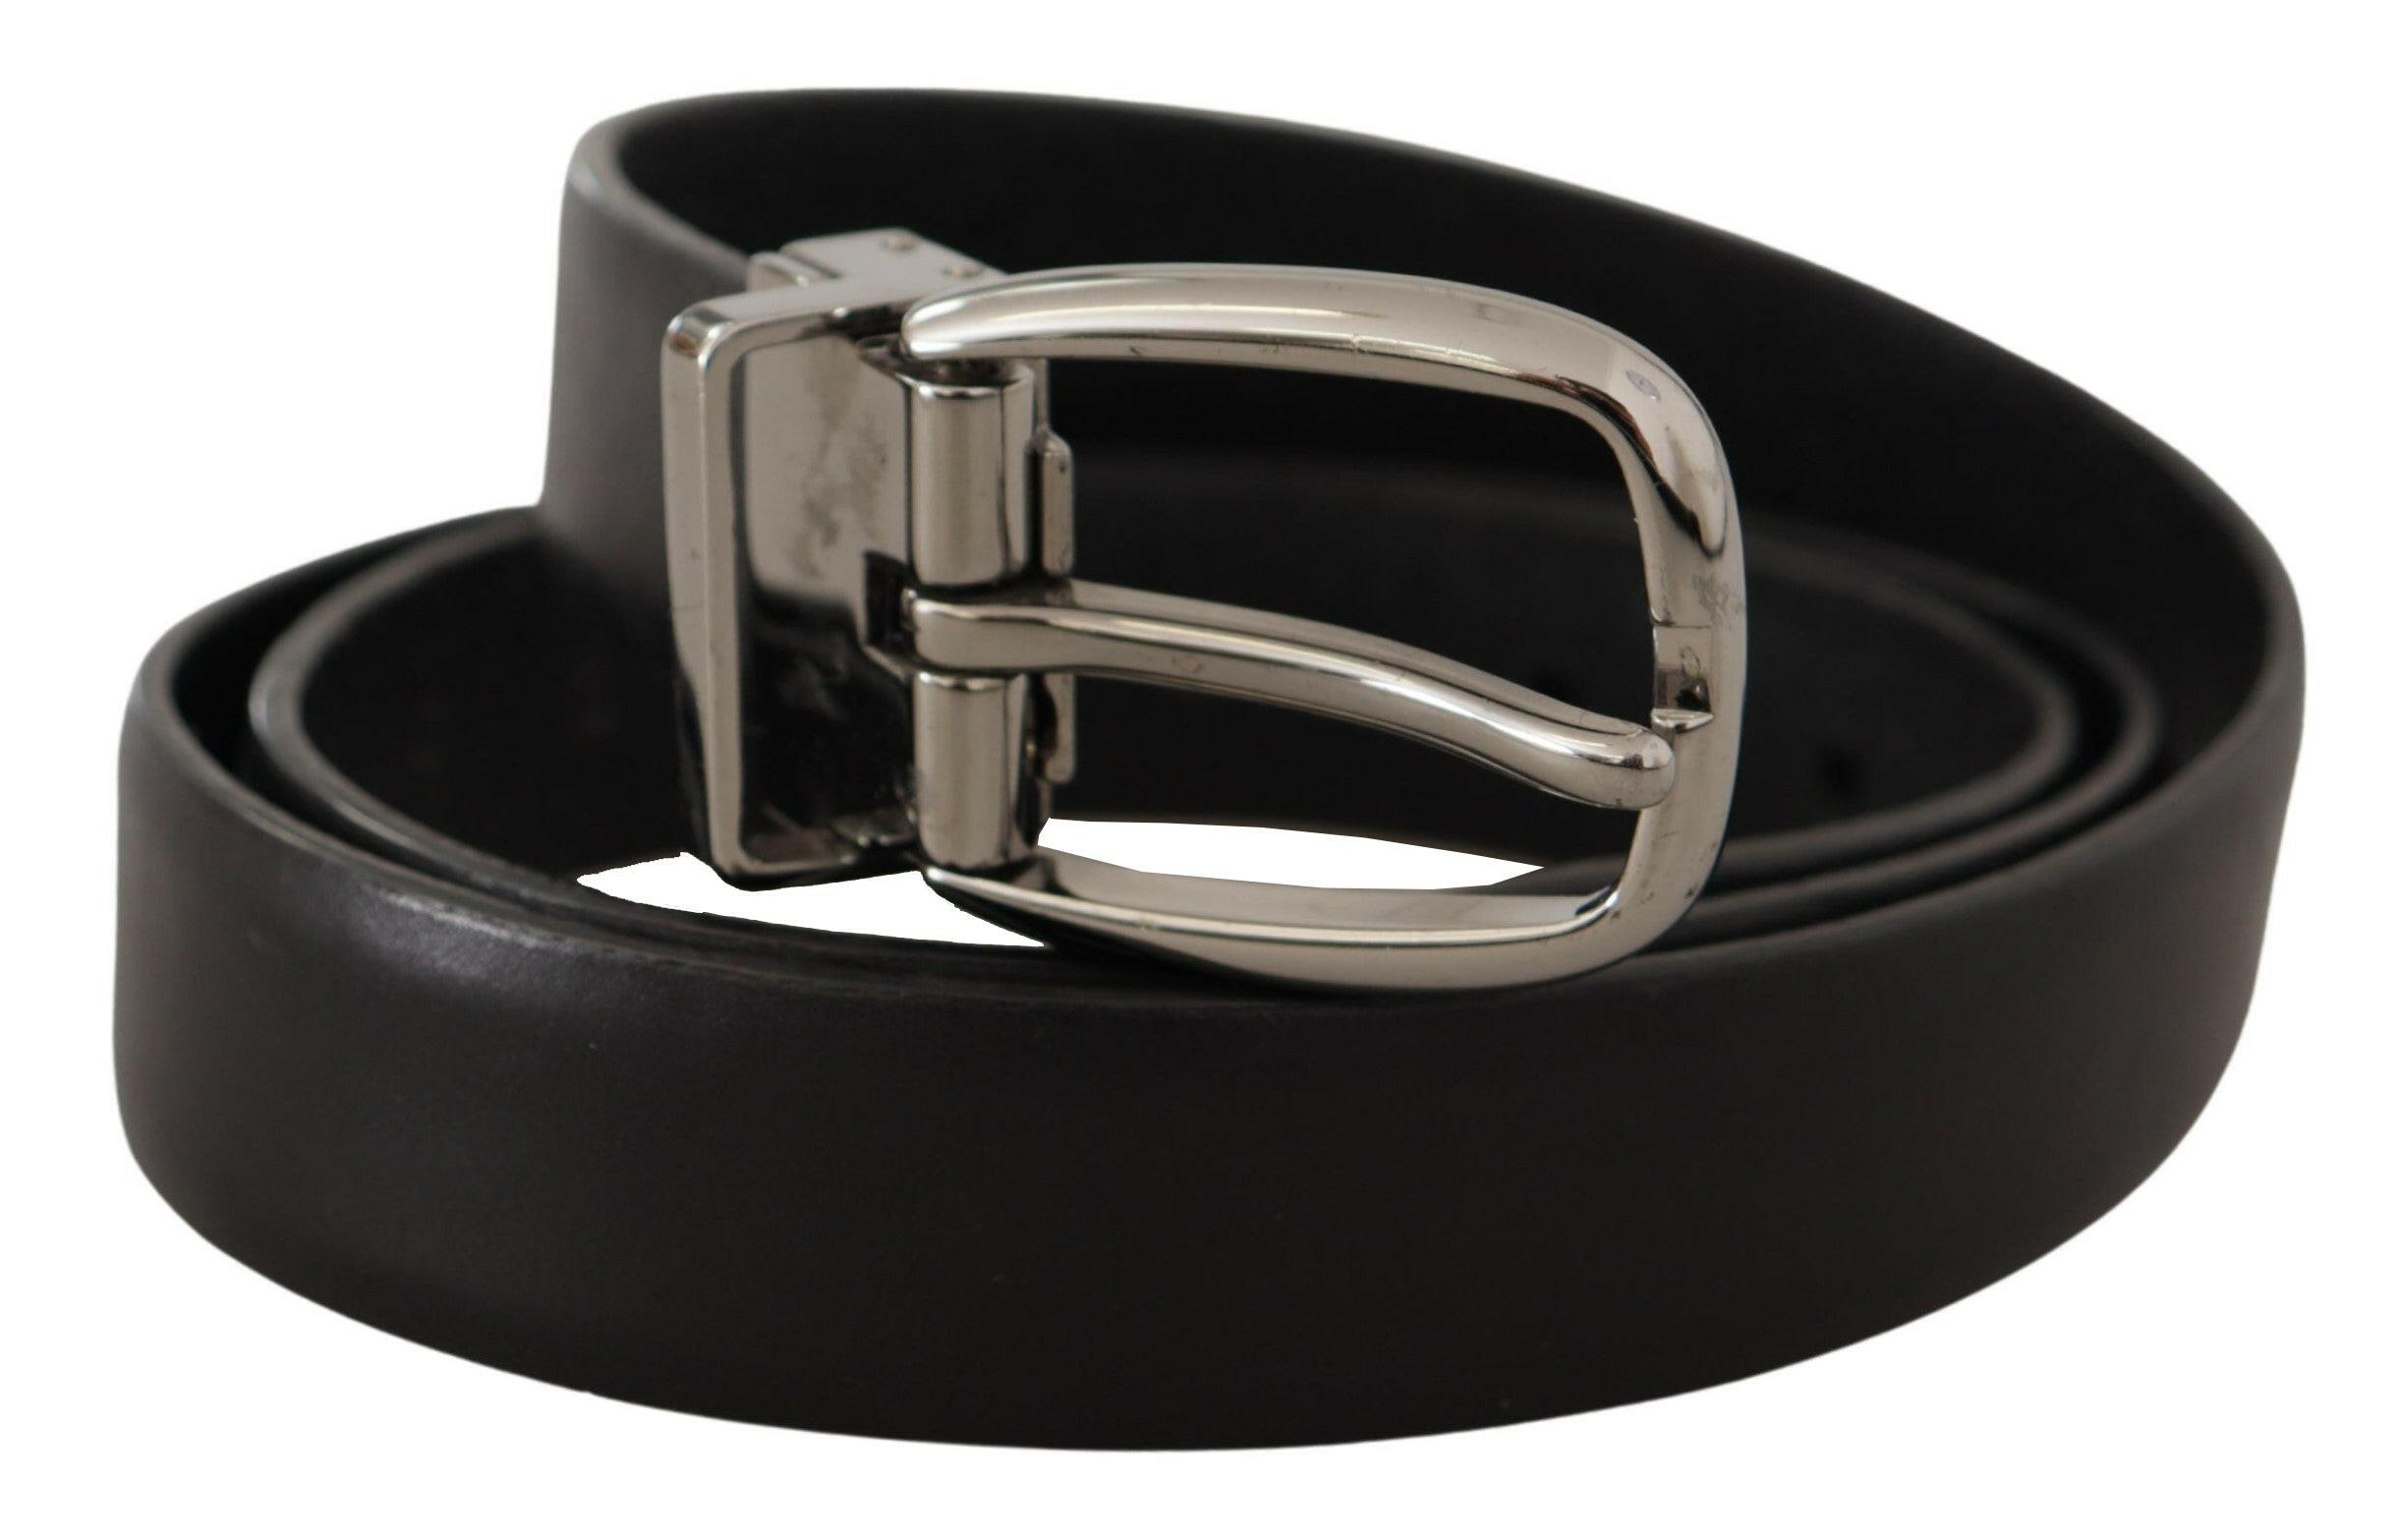 Dolce & Gabbana Black Leather Chrome Logo Metal Buckle Belt - GENUINE AUTHENTIC BRAND LLC  